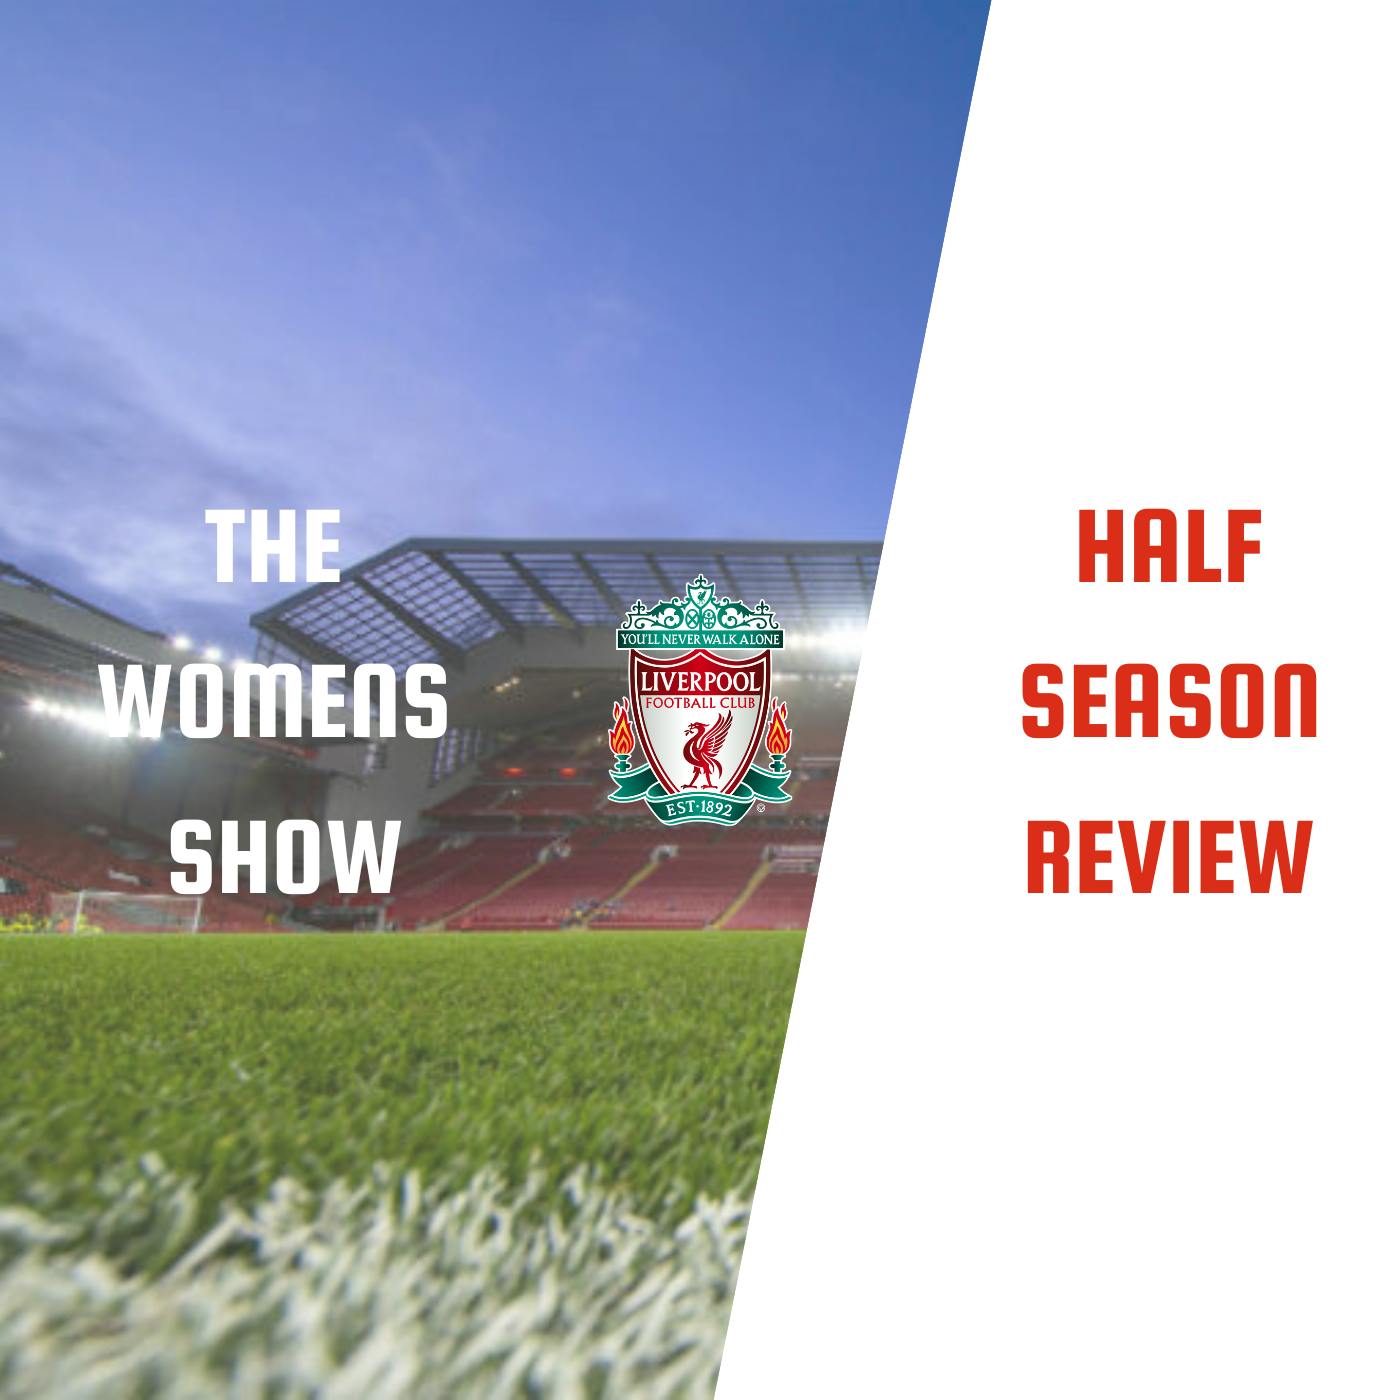 The Womens Show | Half Season Review